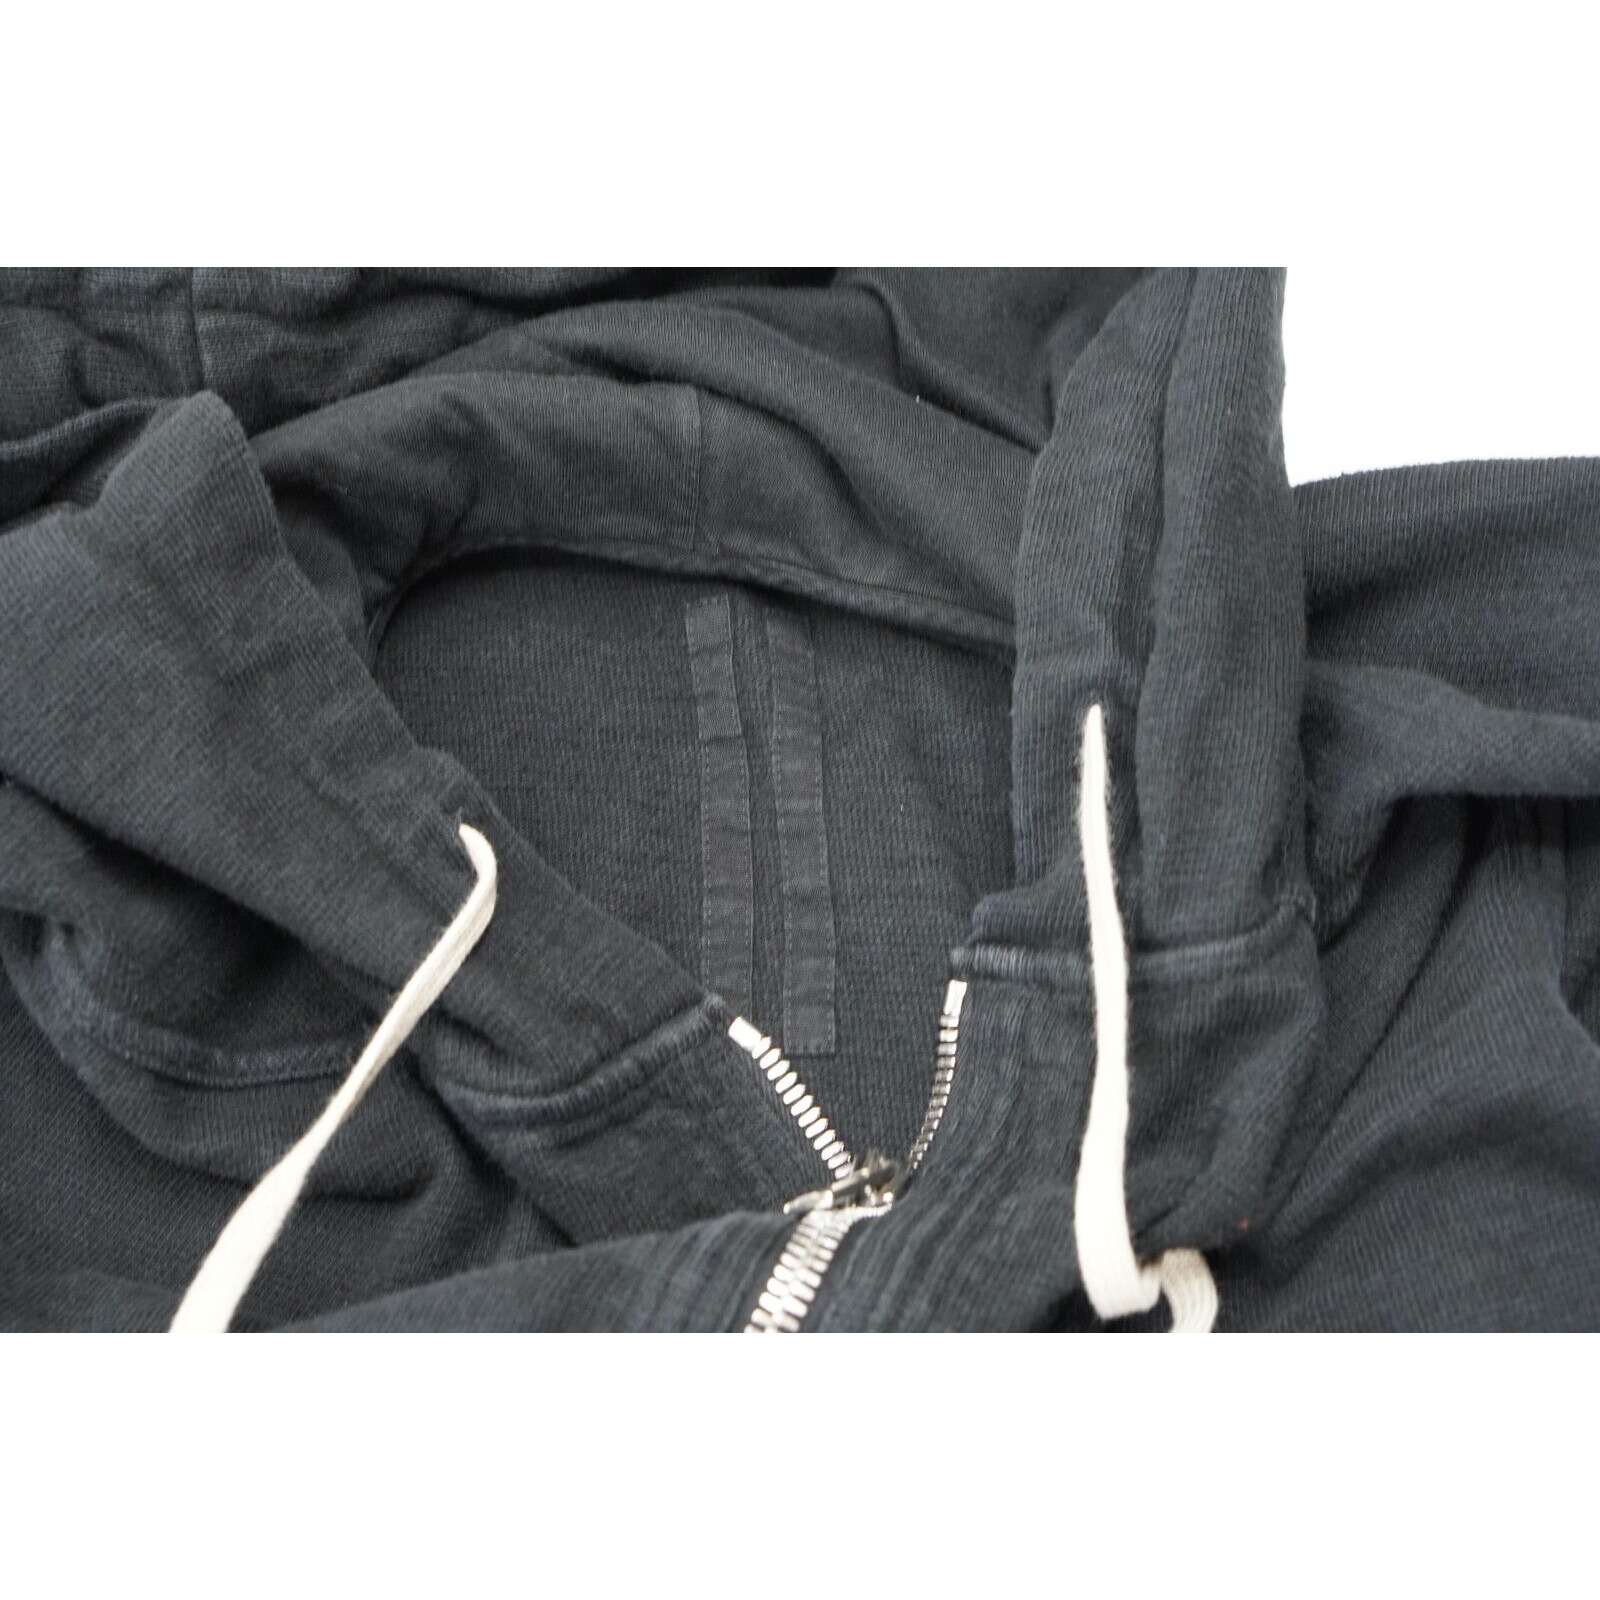 Black Zip Up Sleeveless Jacket Hoodie Cotton - Medium - 4